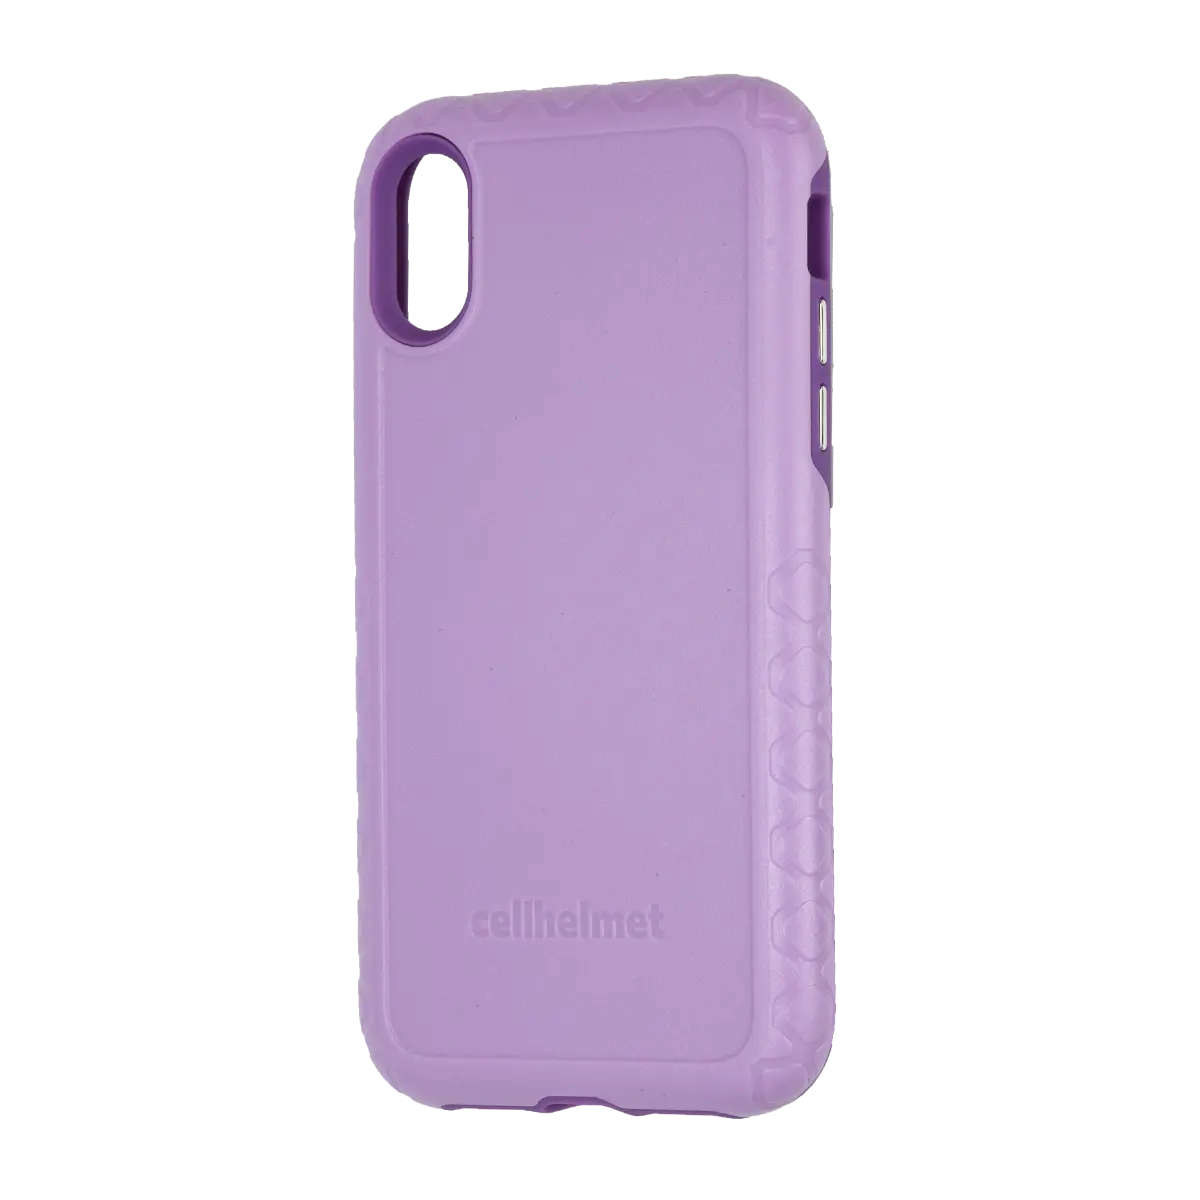 cellhelmet Purple Custom Case for iPhone XR